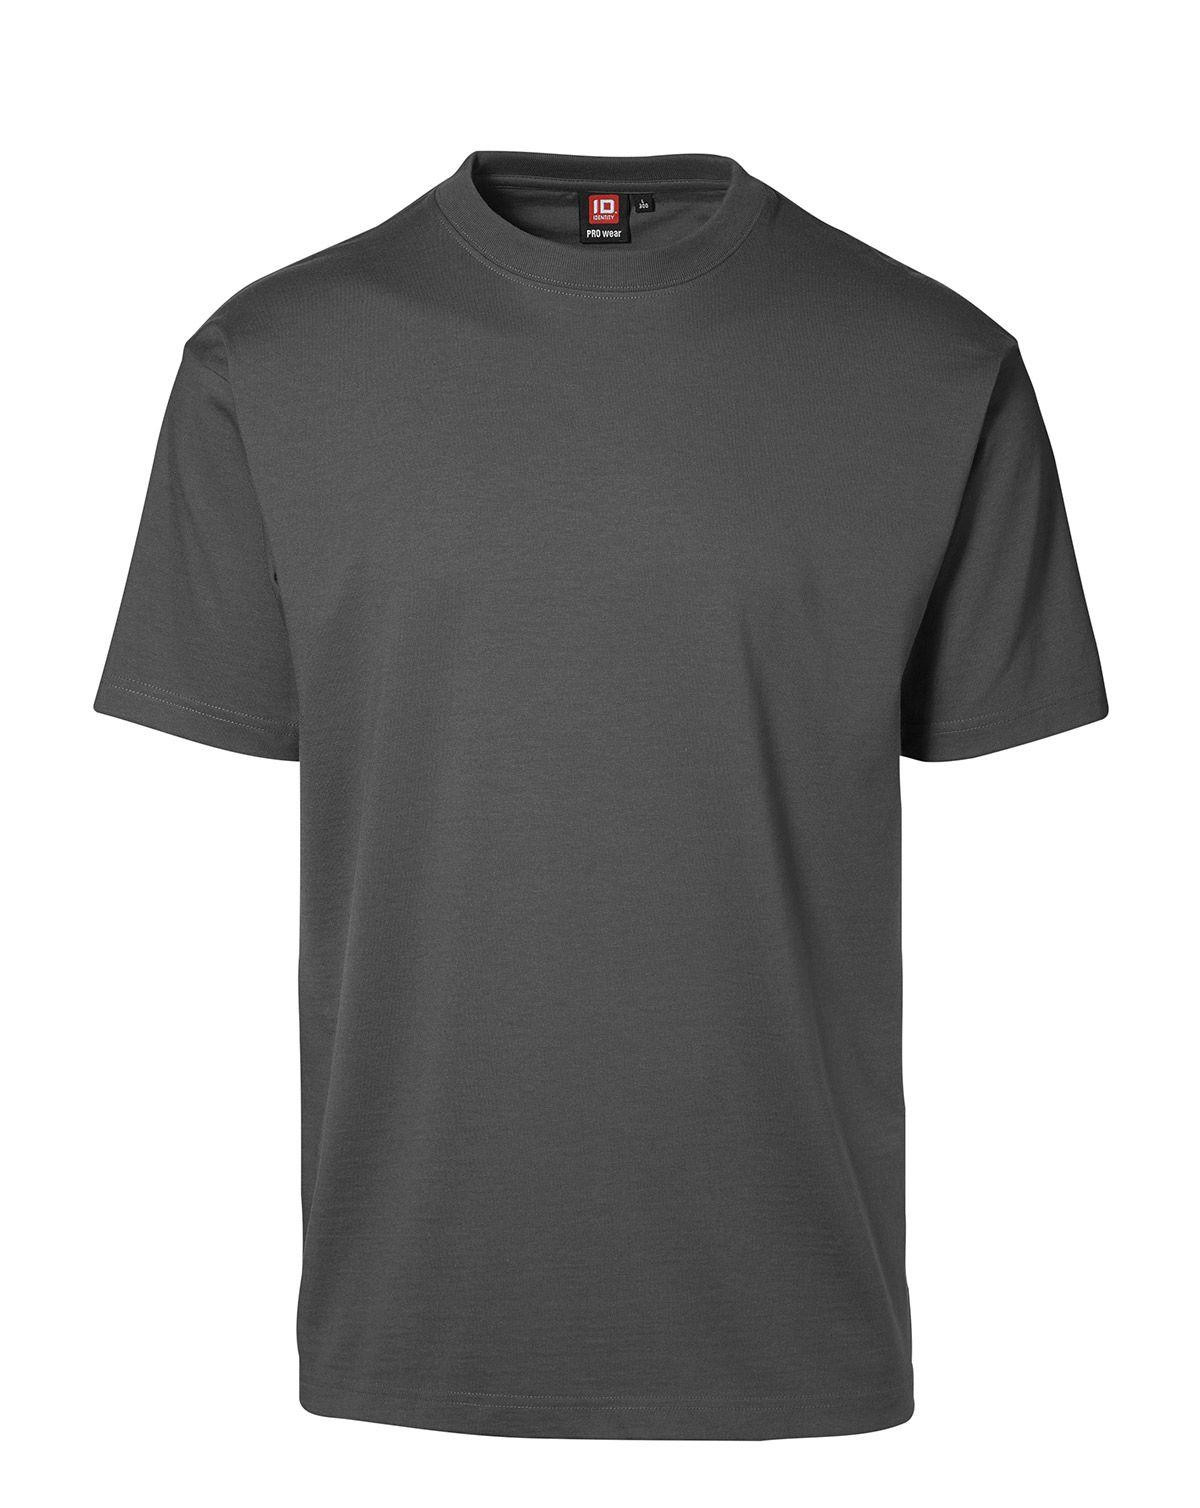 ID PRO Wear T-shirt til Herre (Sølv Grå, 2XL)